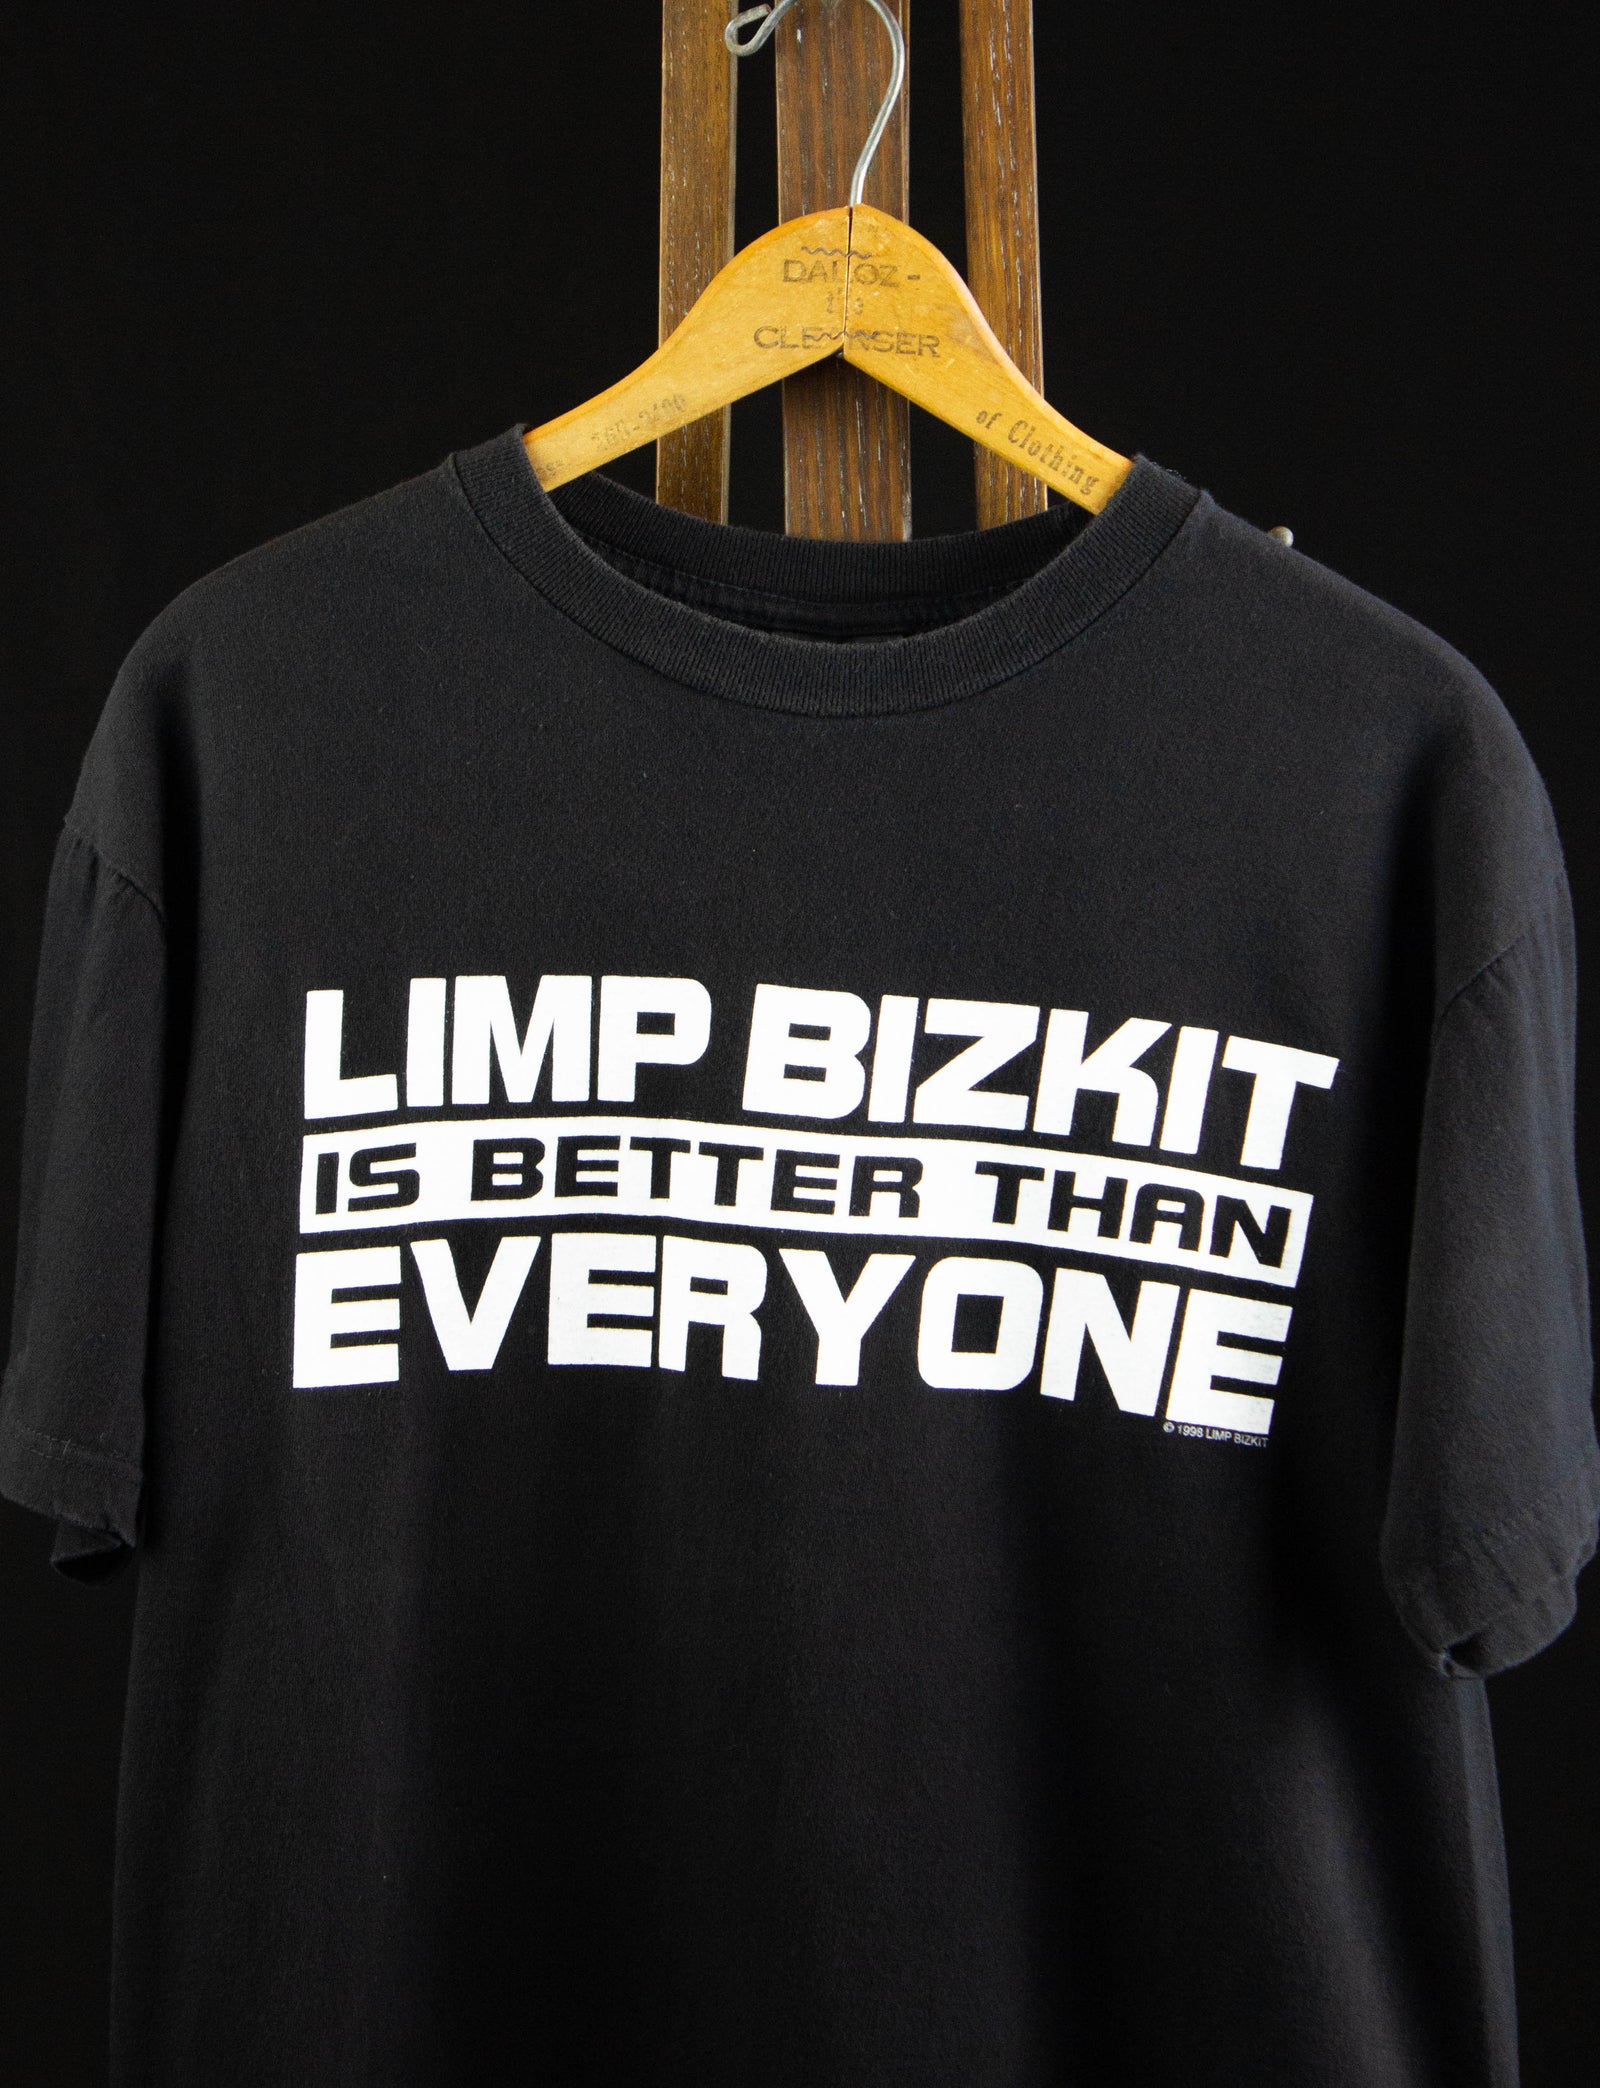 Vintage Limp Bizkit Concert T Shirt 1998 Is Better Than Everyone Black and White Medium